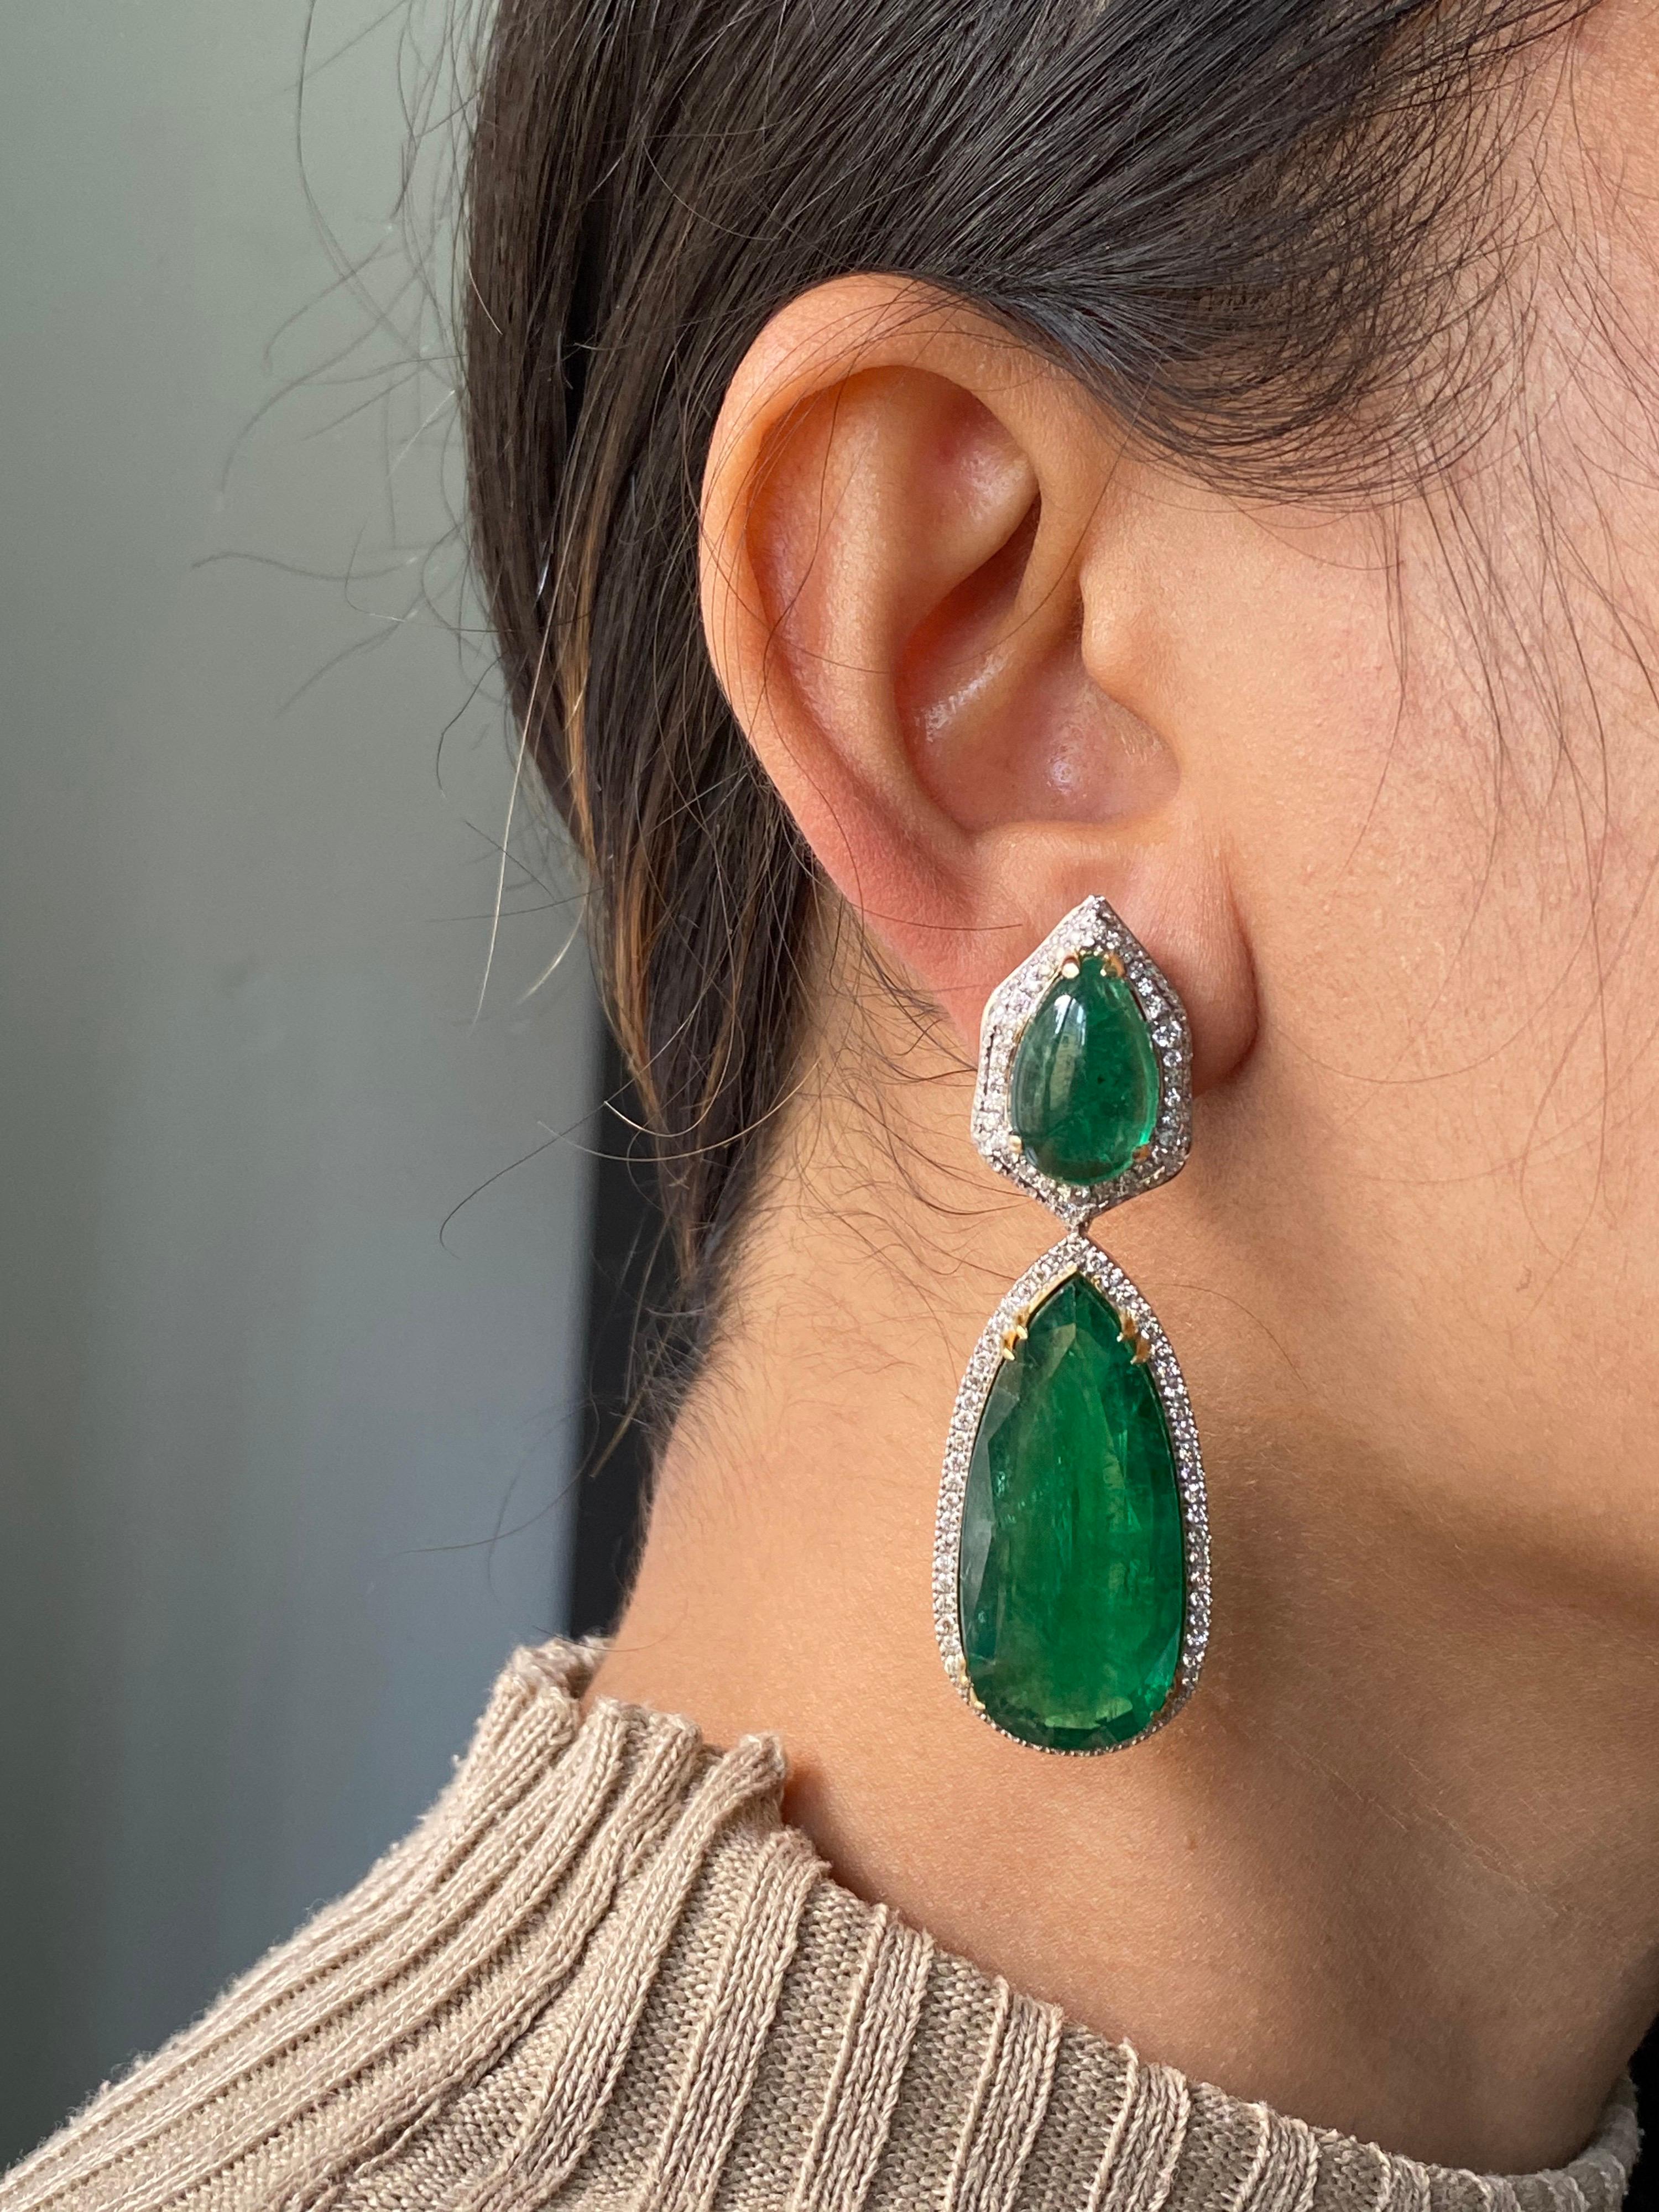 emerald drop earrings white gold